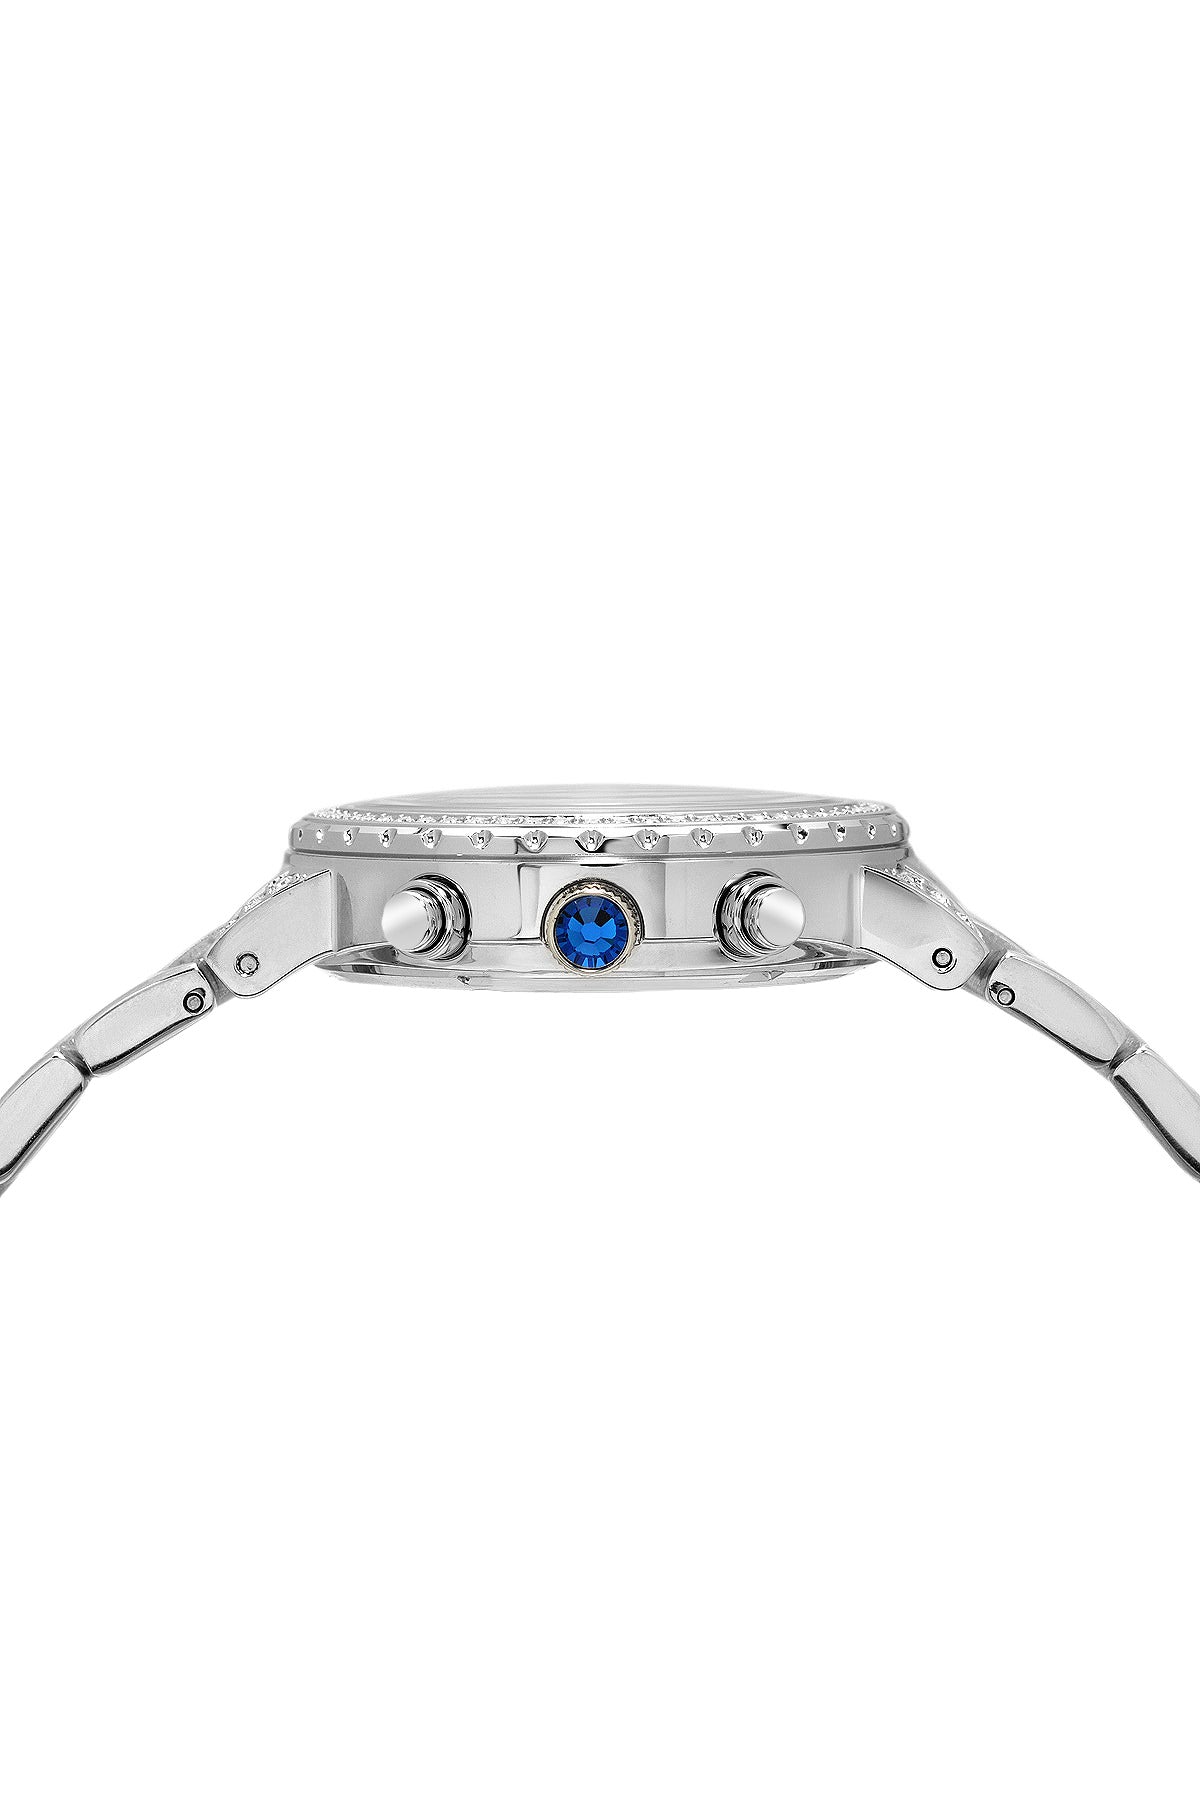 Porsamo Bleu Pilar luxury chronograph women's stainless steel watch, silver, blue 502APIS